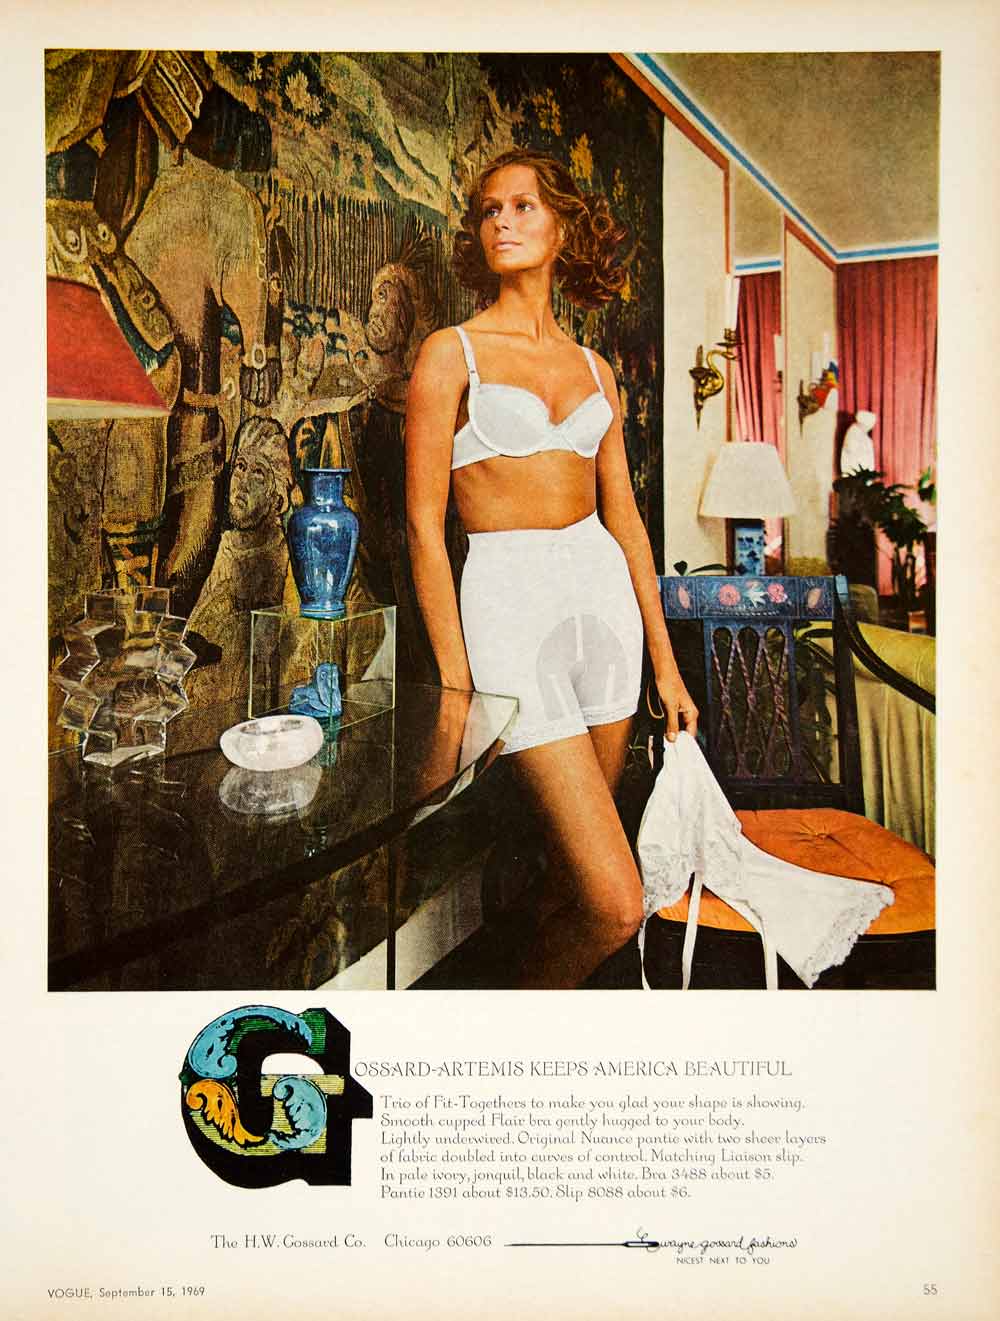 1969 Ad Vintage Grossard Artemis Lingerie Bra Brassiere Panty